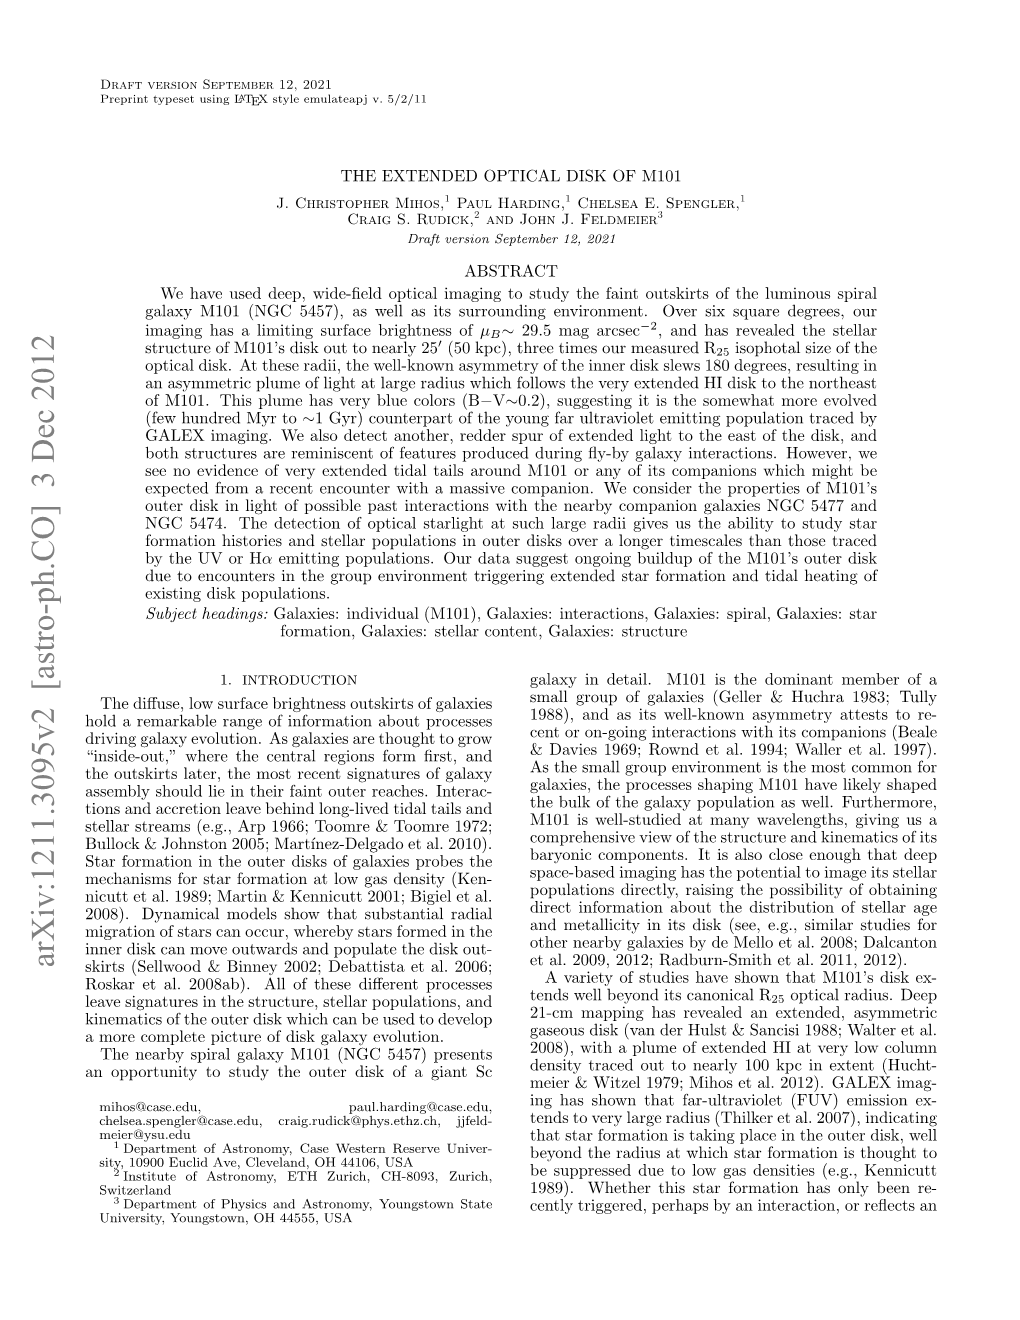 Arxiv:1211.3095V2 [Astro-Ph.CO] 3 Dec 2012 Skirts (Sellwood & Binney 2002; Debattista Et Al